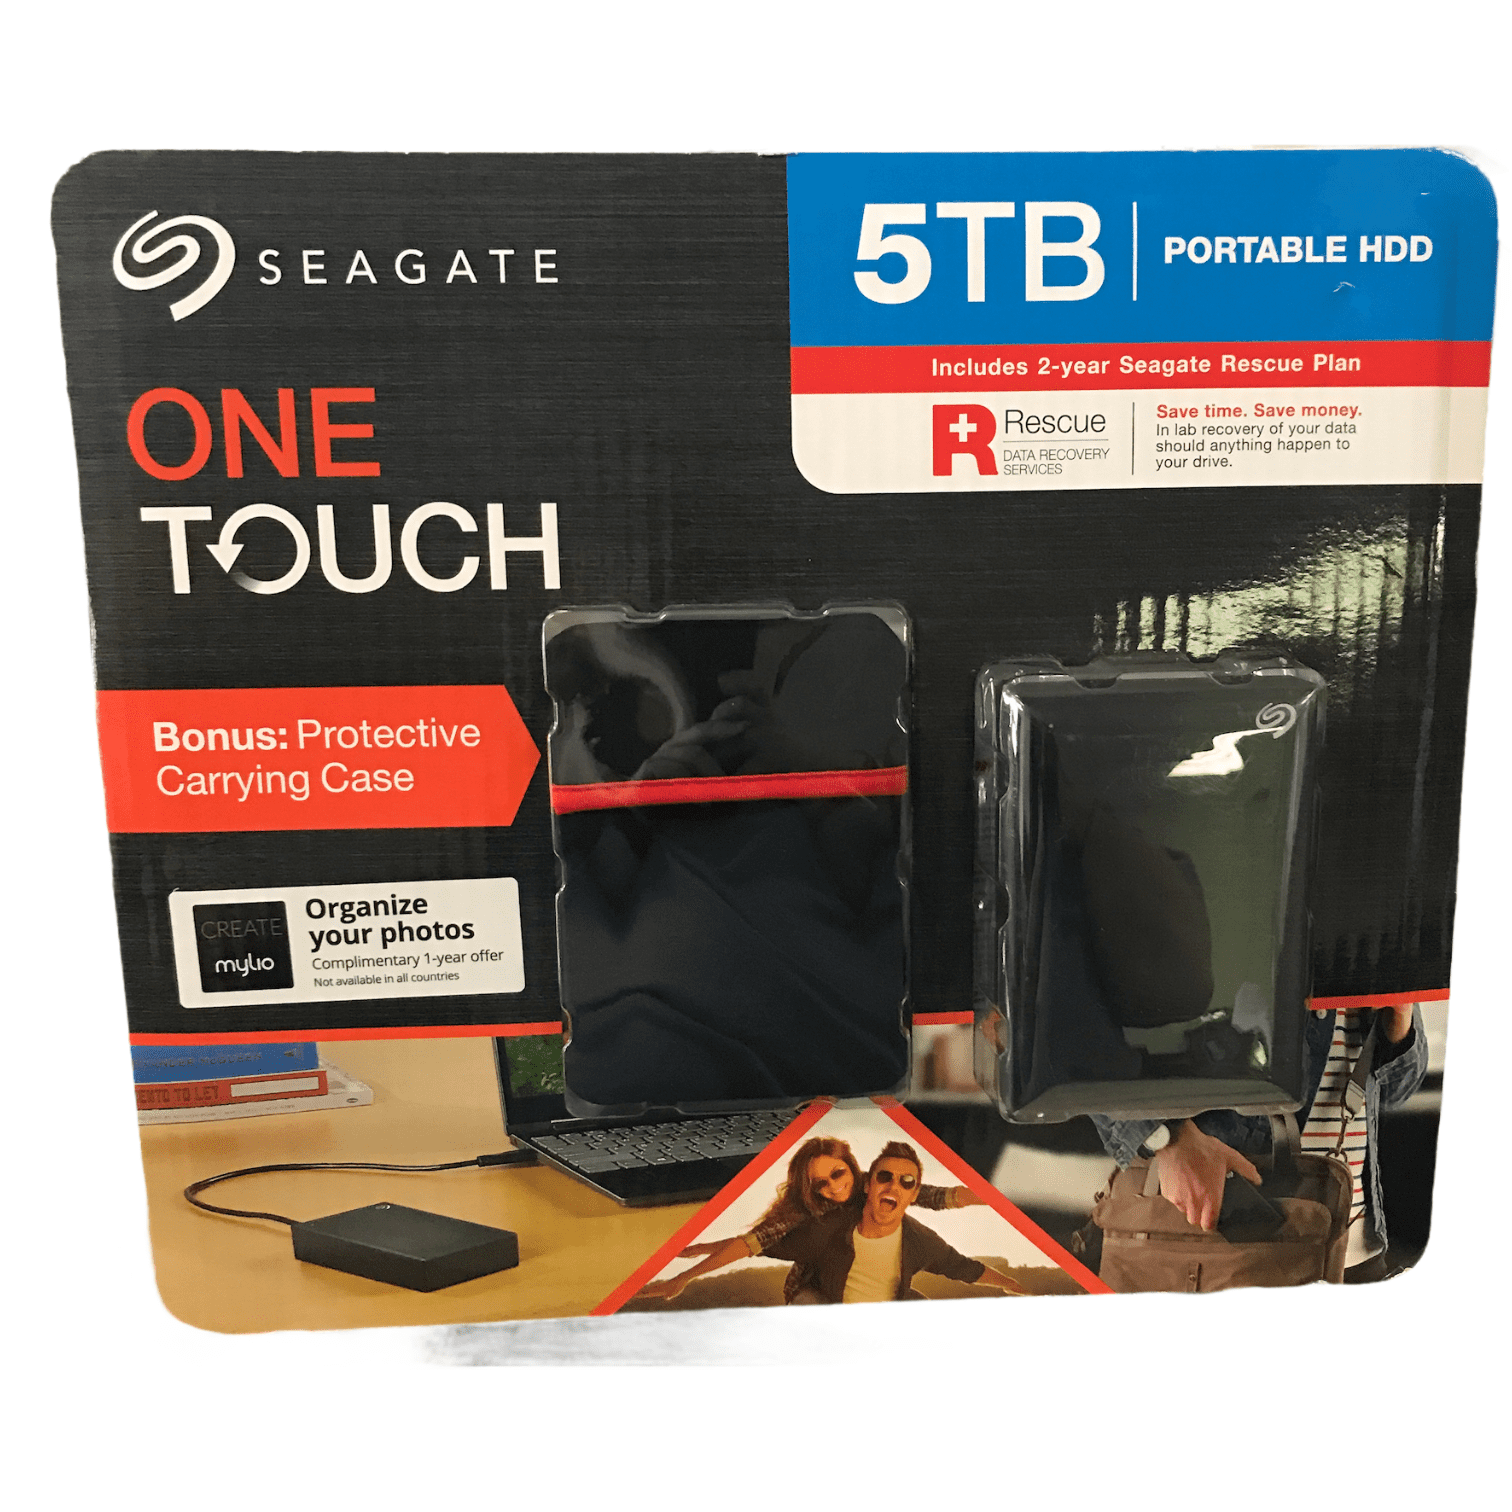 dræne loyalitet emulering Seagate One Touch 5TB External Hard Drive Black USB 3.0 - Walmart.com